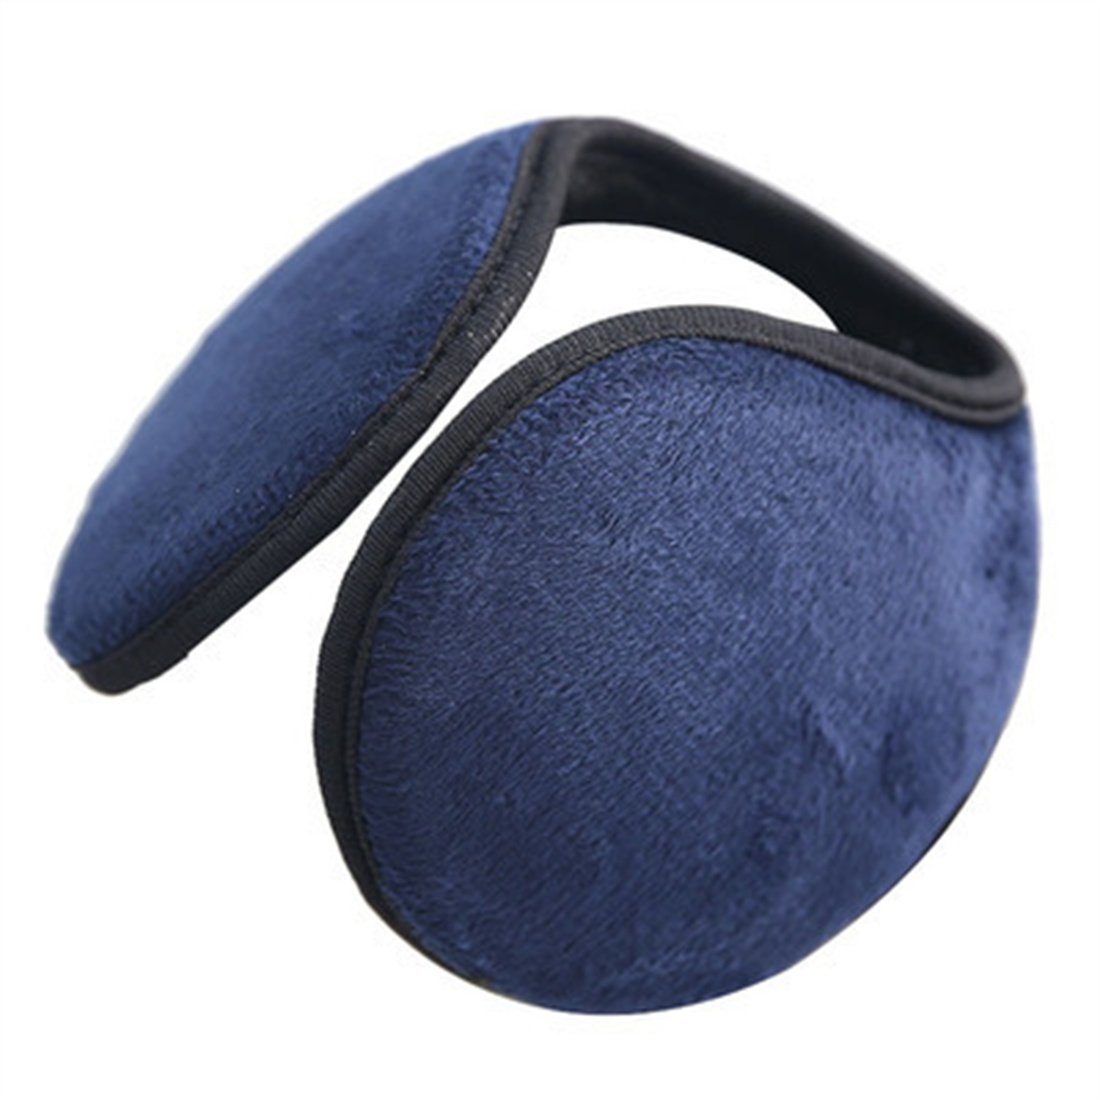 DÖRÖY Ohrenmütze Winter Gehörschutz Plüsch Ohrenschützer, unisex warme Ohrenschützer blau